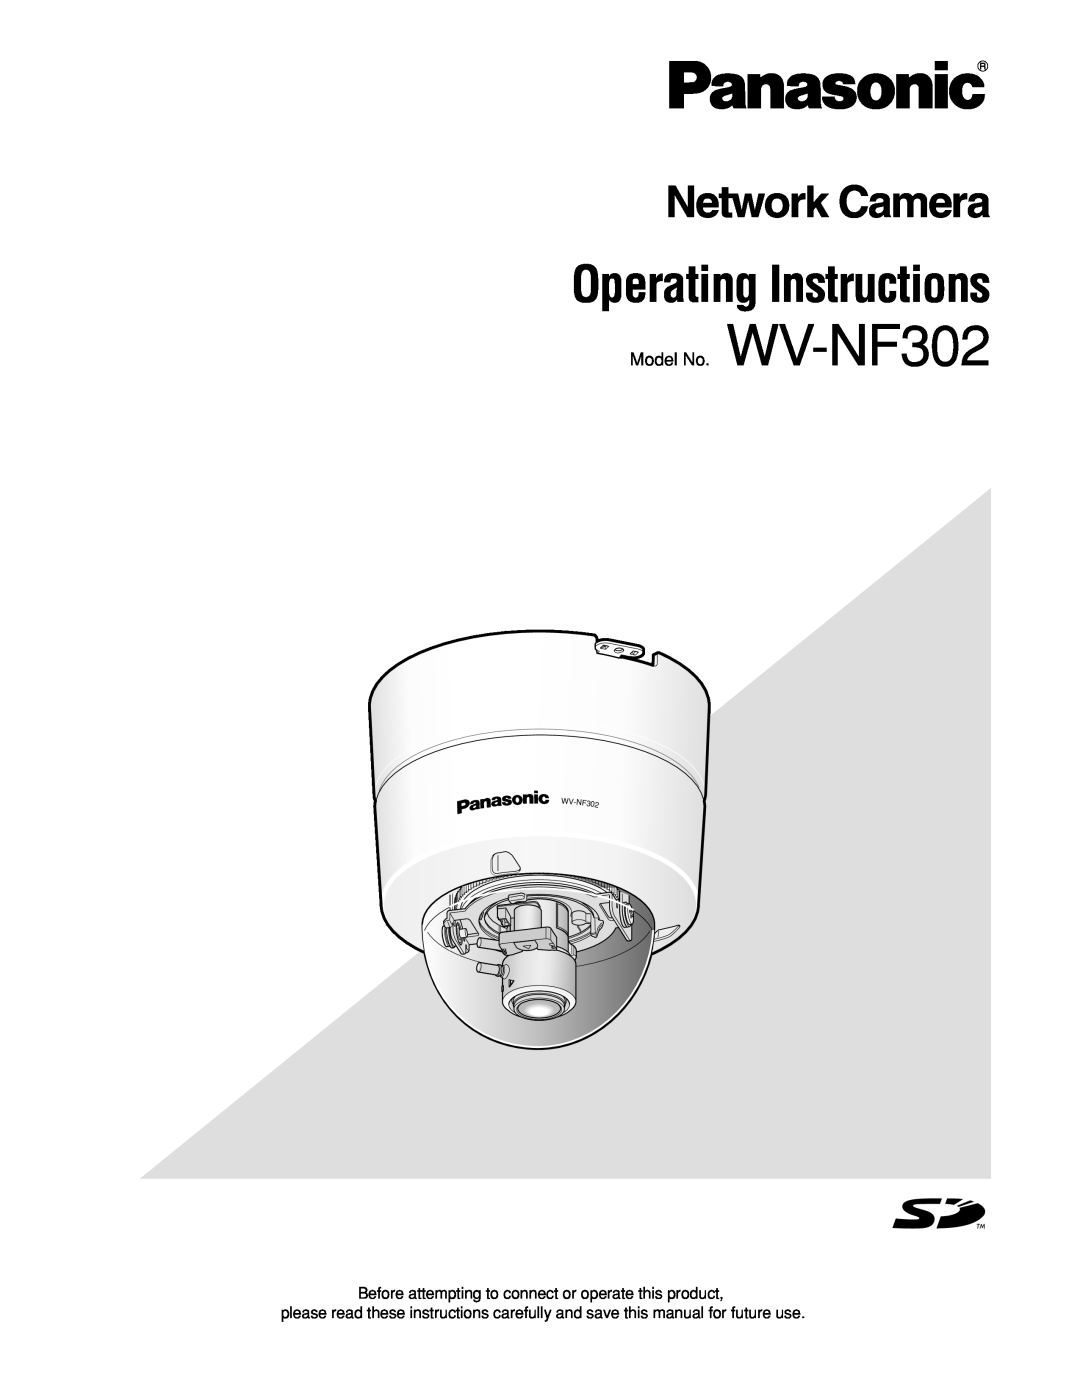 Panasonic WV-NF302 operating instructions Operating Instructions, Network Camera 